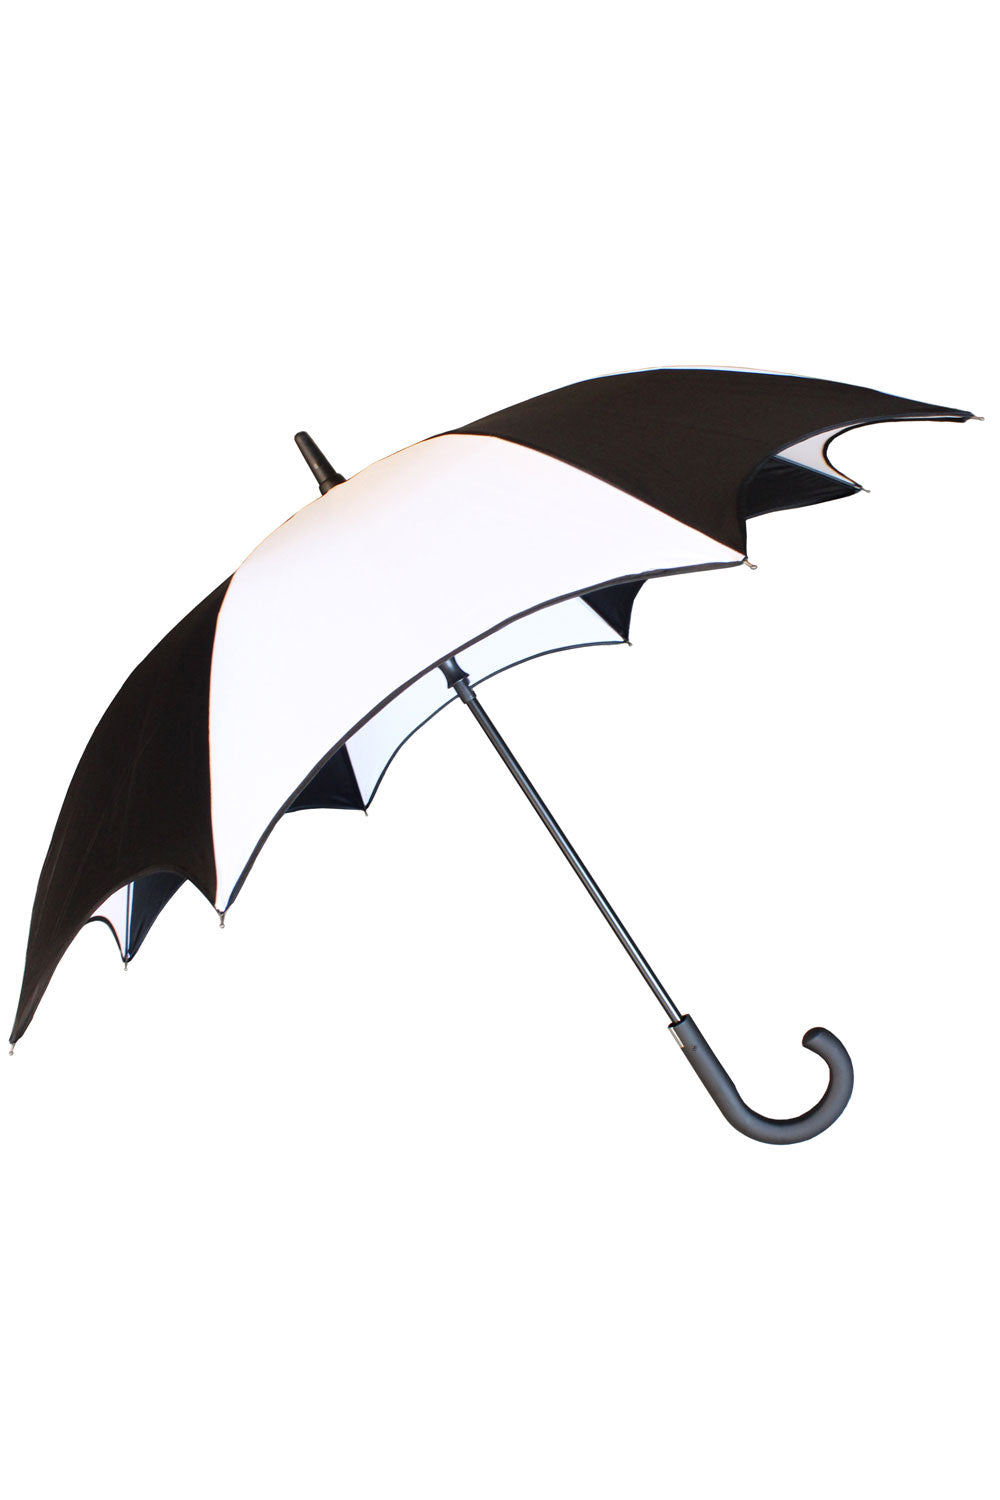 beetlejuice inspired umbrella